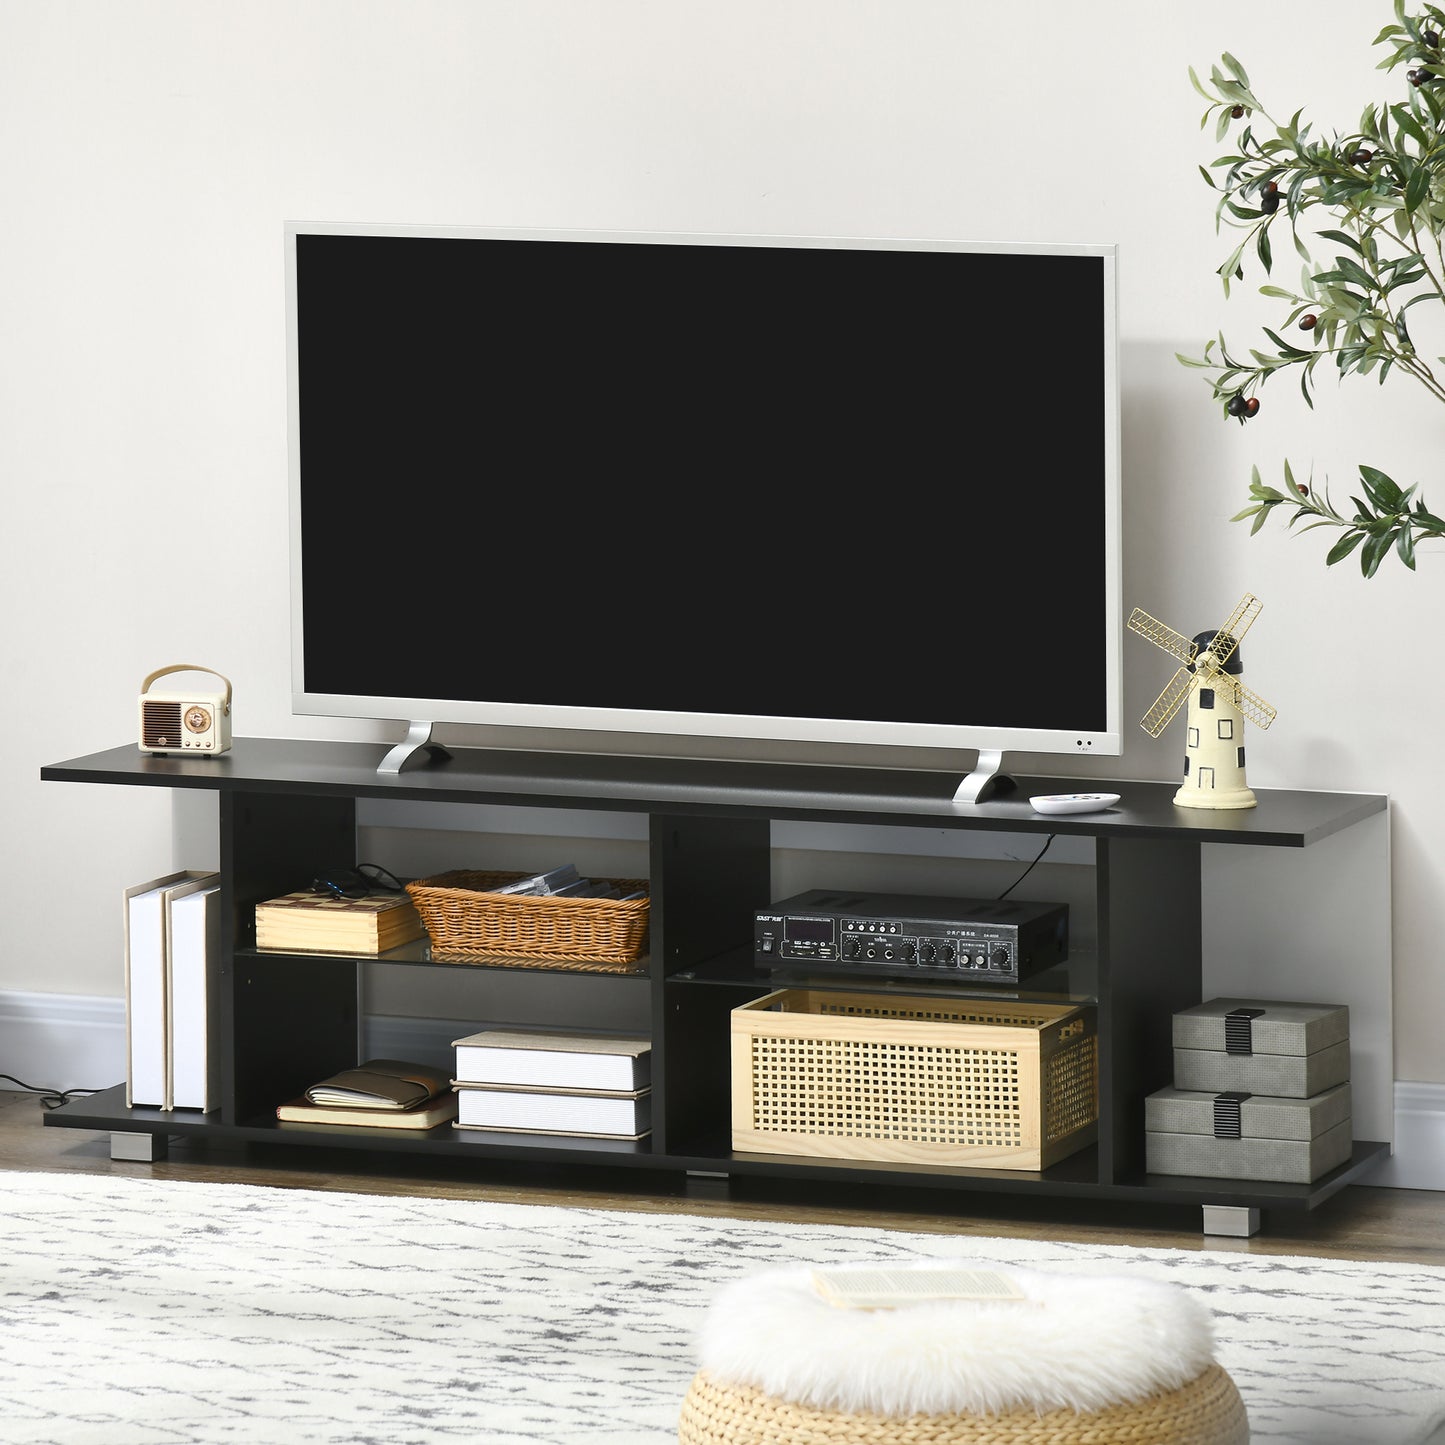 HOMCOM TV Stand 145cm Modern TV Unit with Glass Shelves RGB LED Light for 32 - 60 inch 4k TV Black